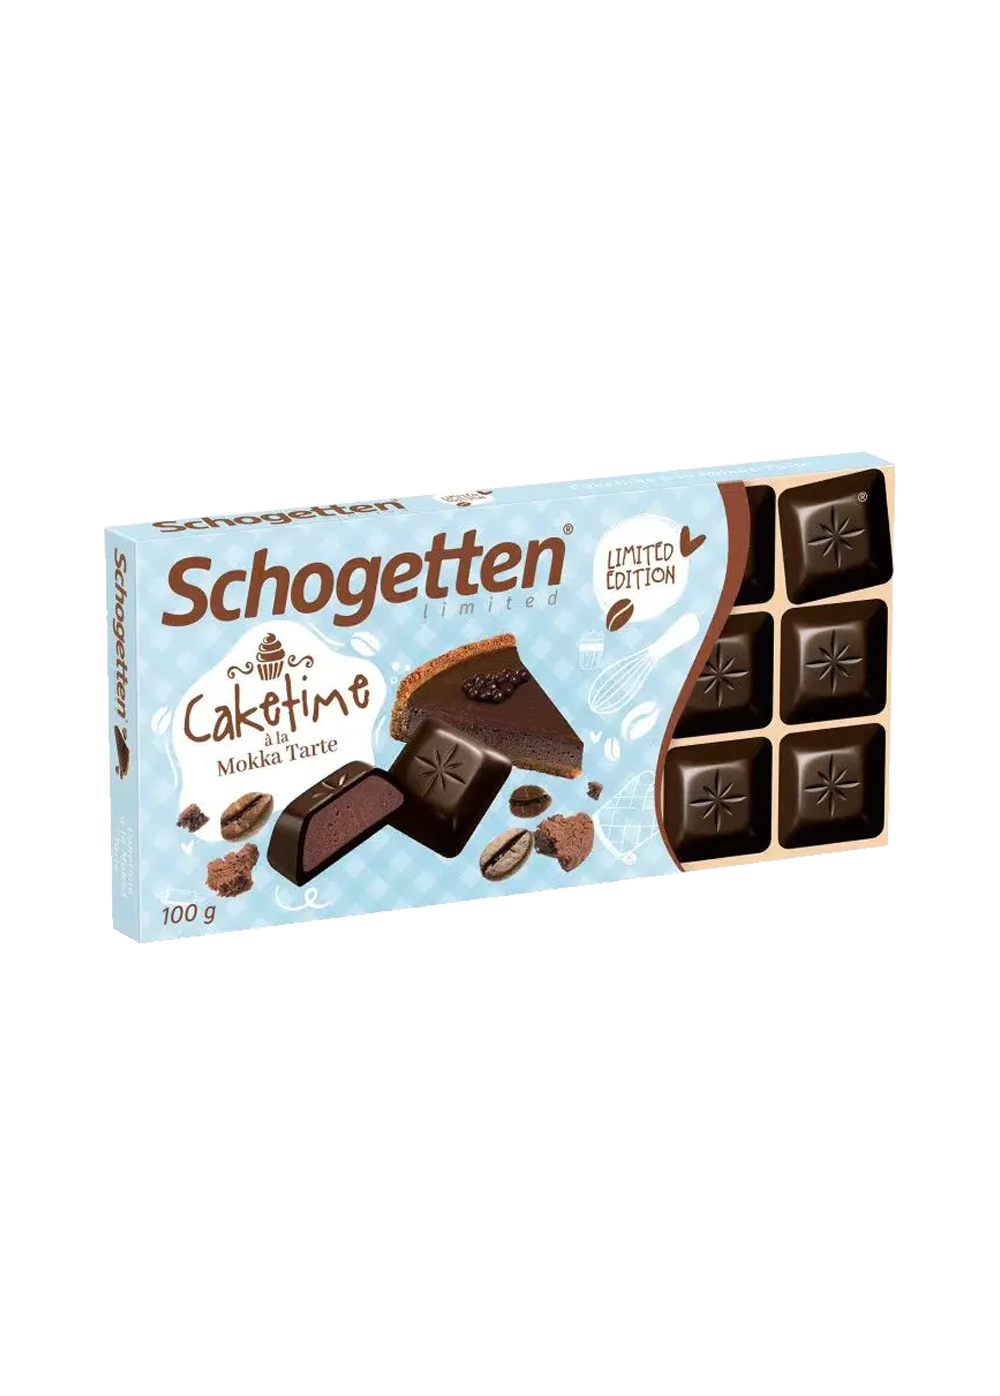 Schogetten Caketime a la Mokka Tarte Chocolate 100g